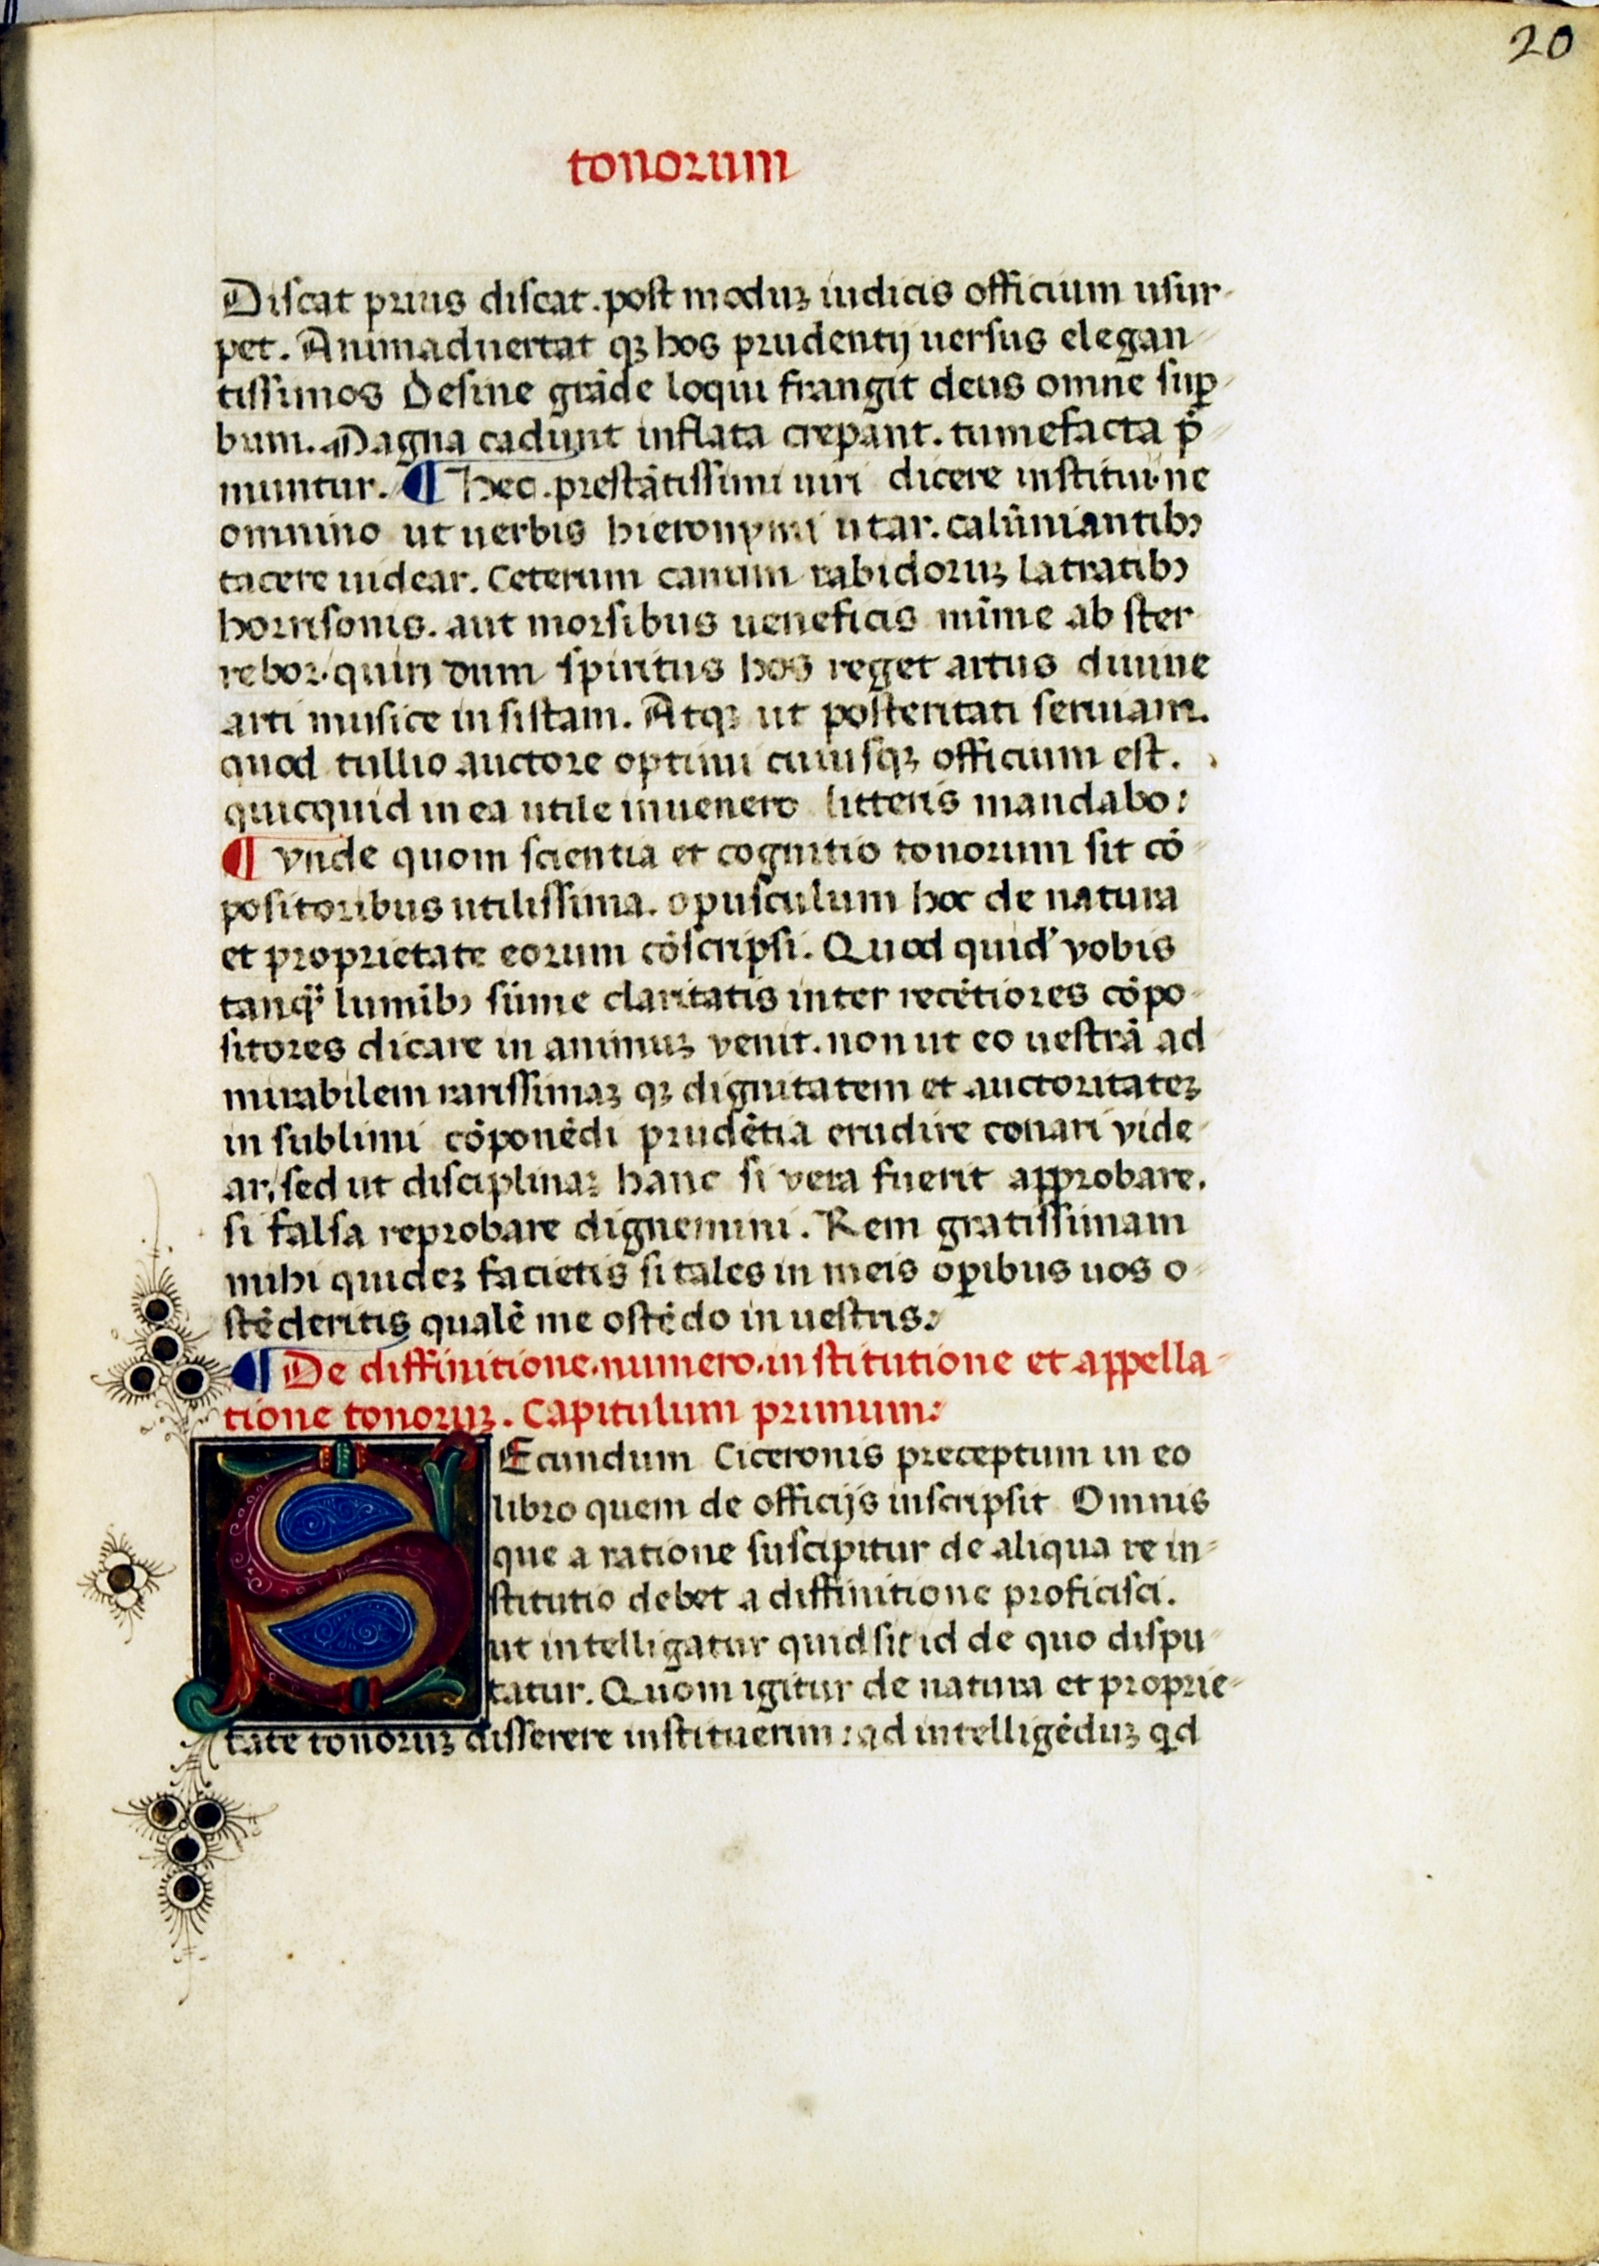 Bologna, Biblioteca Universitaria, MS 2573, fol. 19r. Source: Biblioteca Universitaria, Bologna.